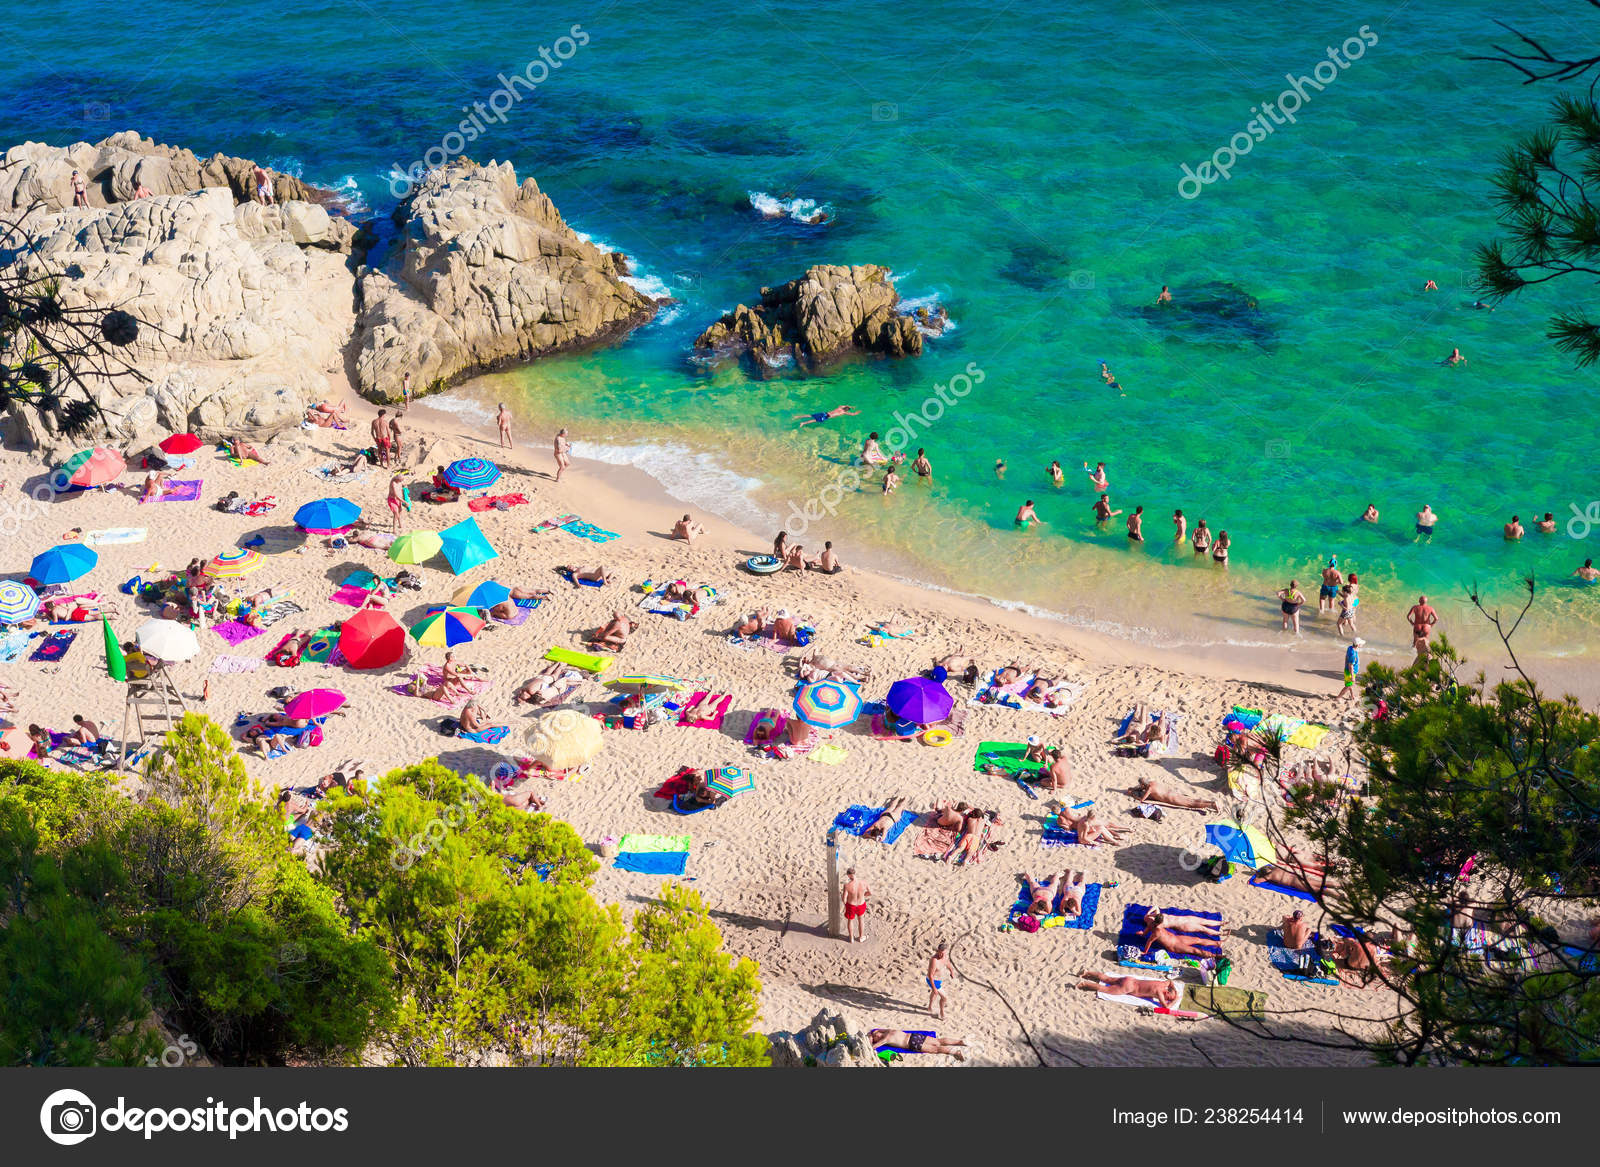 Spanish nudist beach resort